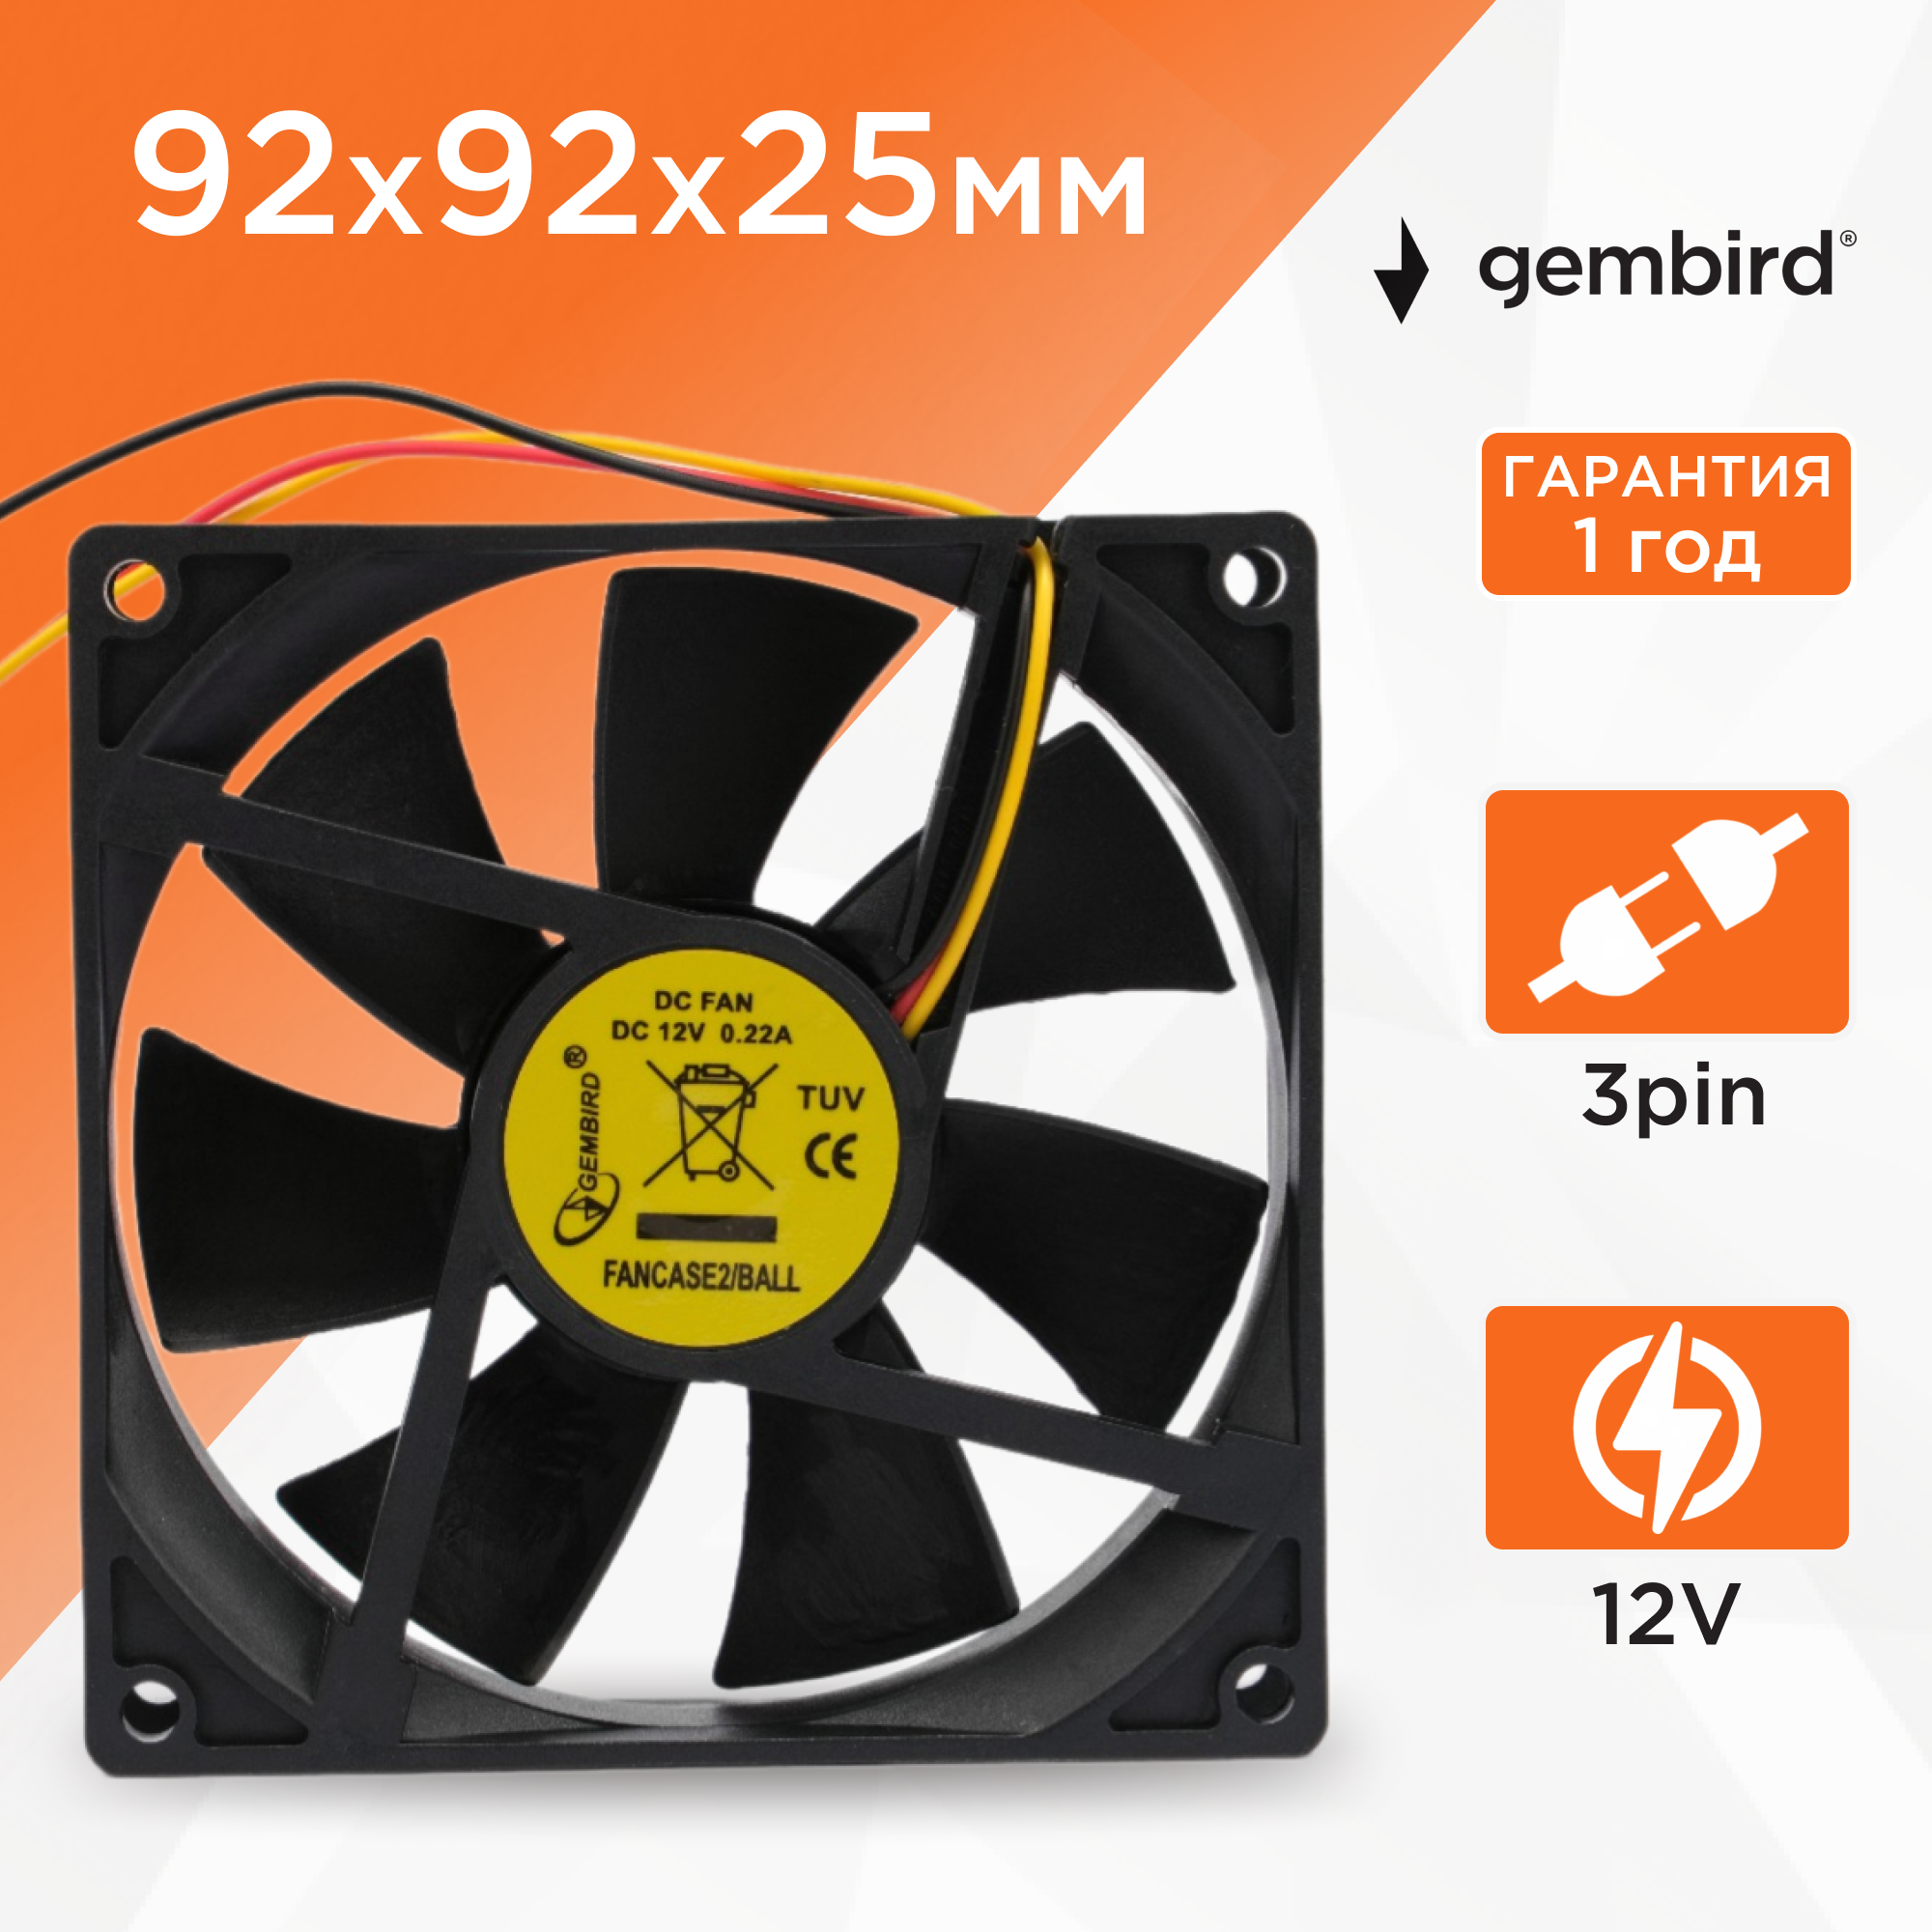 Вентилятор охлаждения Gembird FANCASE2/BALL, 92x92x25, 3 pin, подшипник, провод 30 см